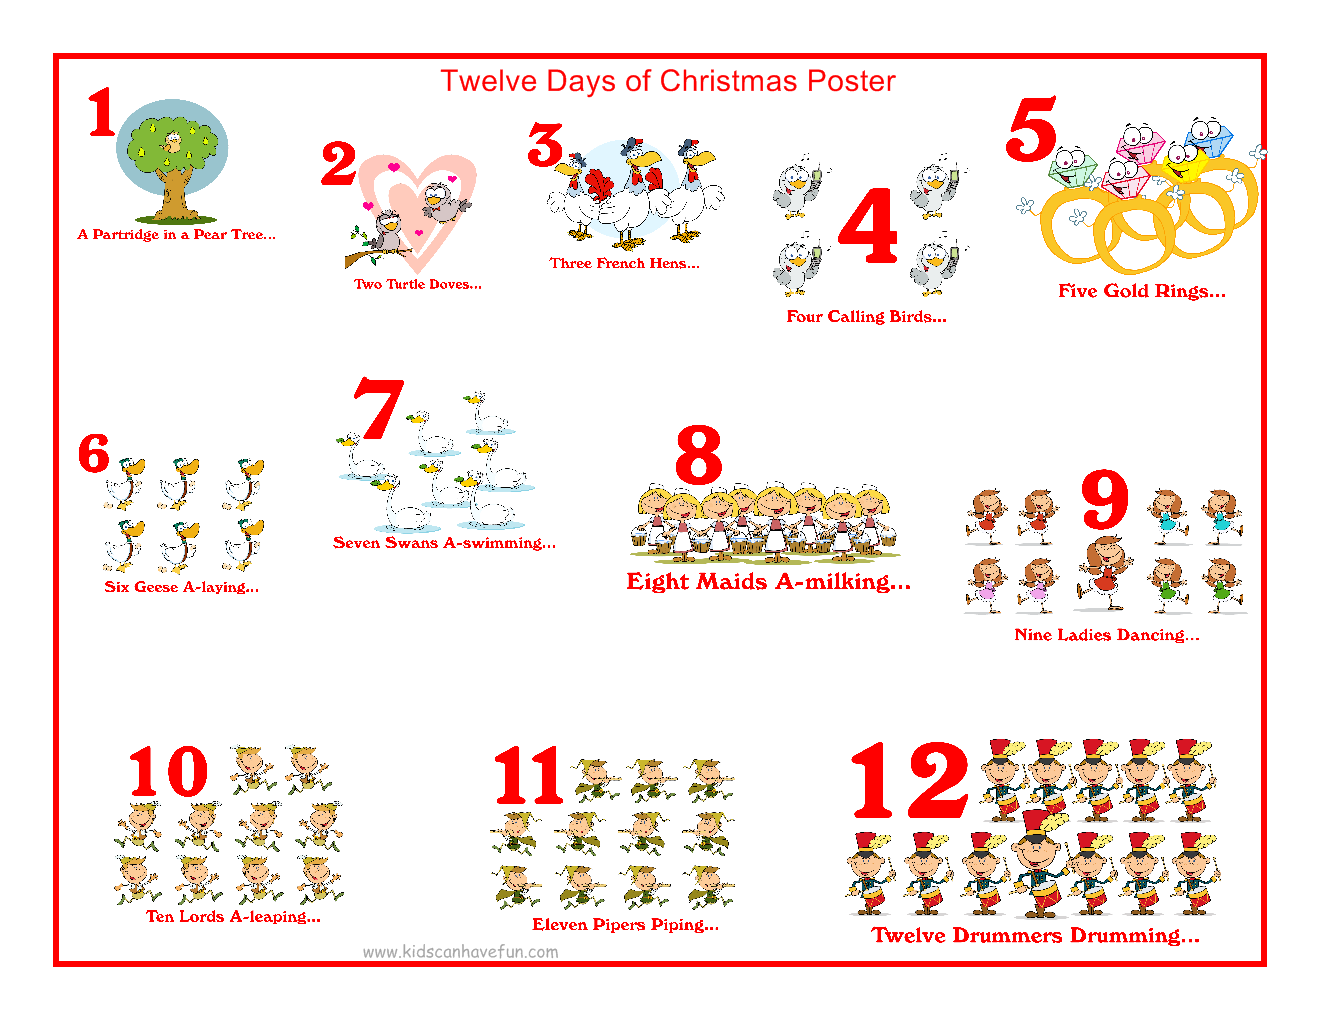 12 days of christmas Hoyland Common Primary School BlogSite